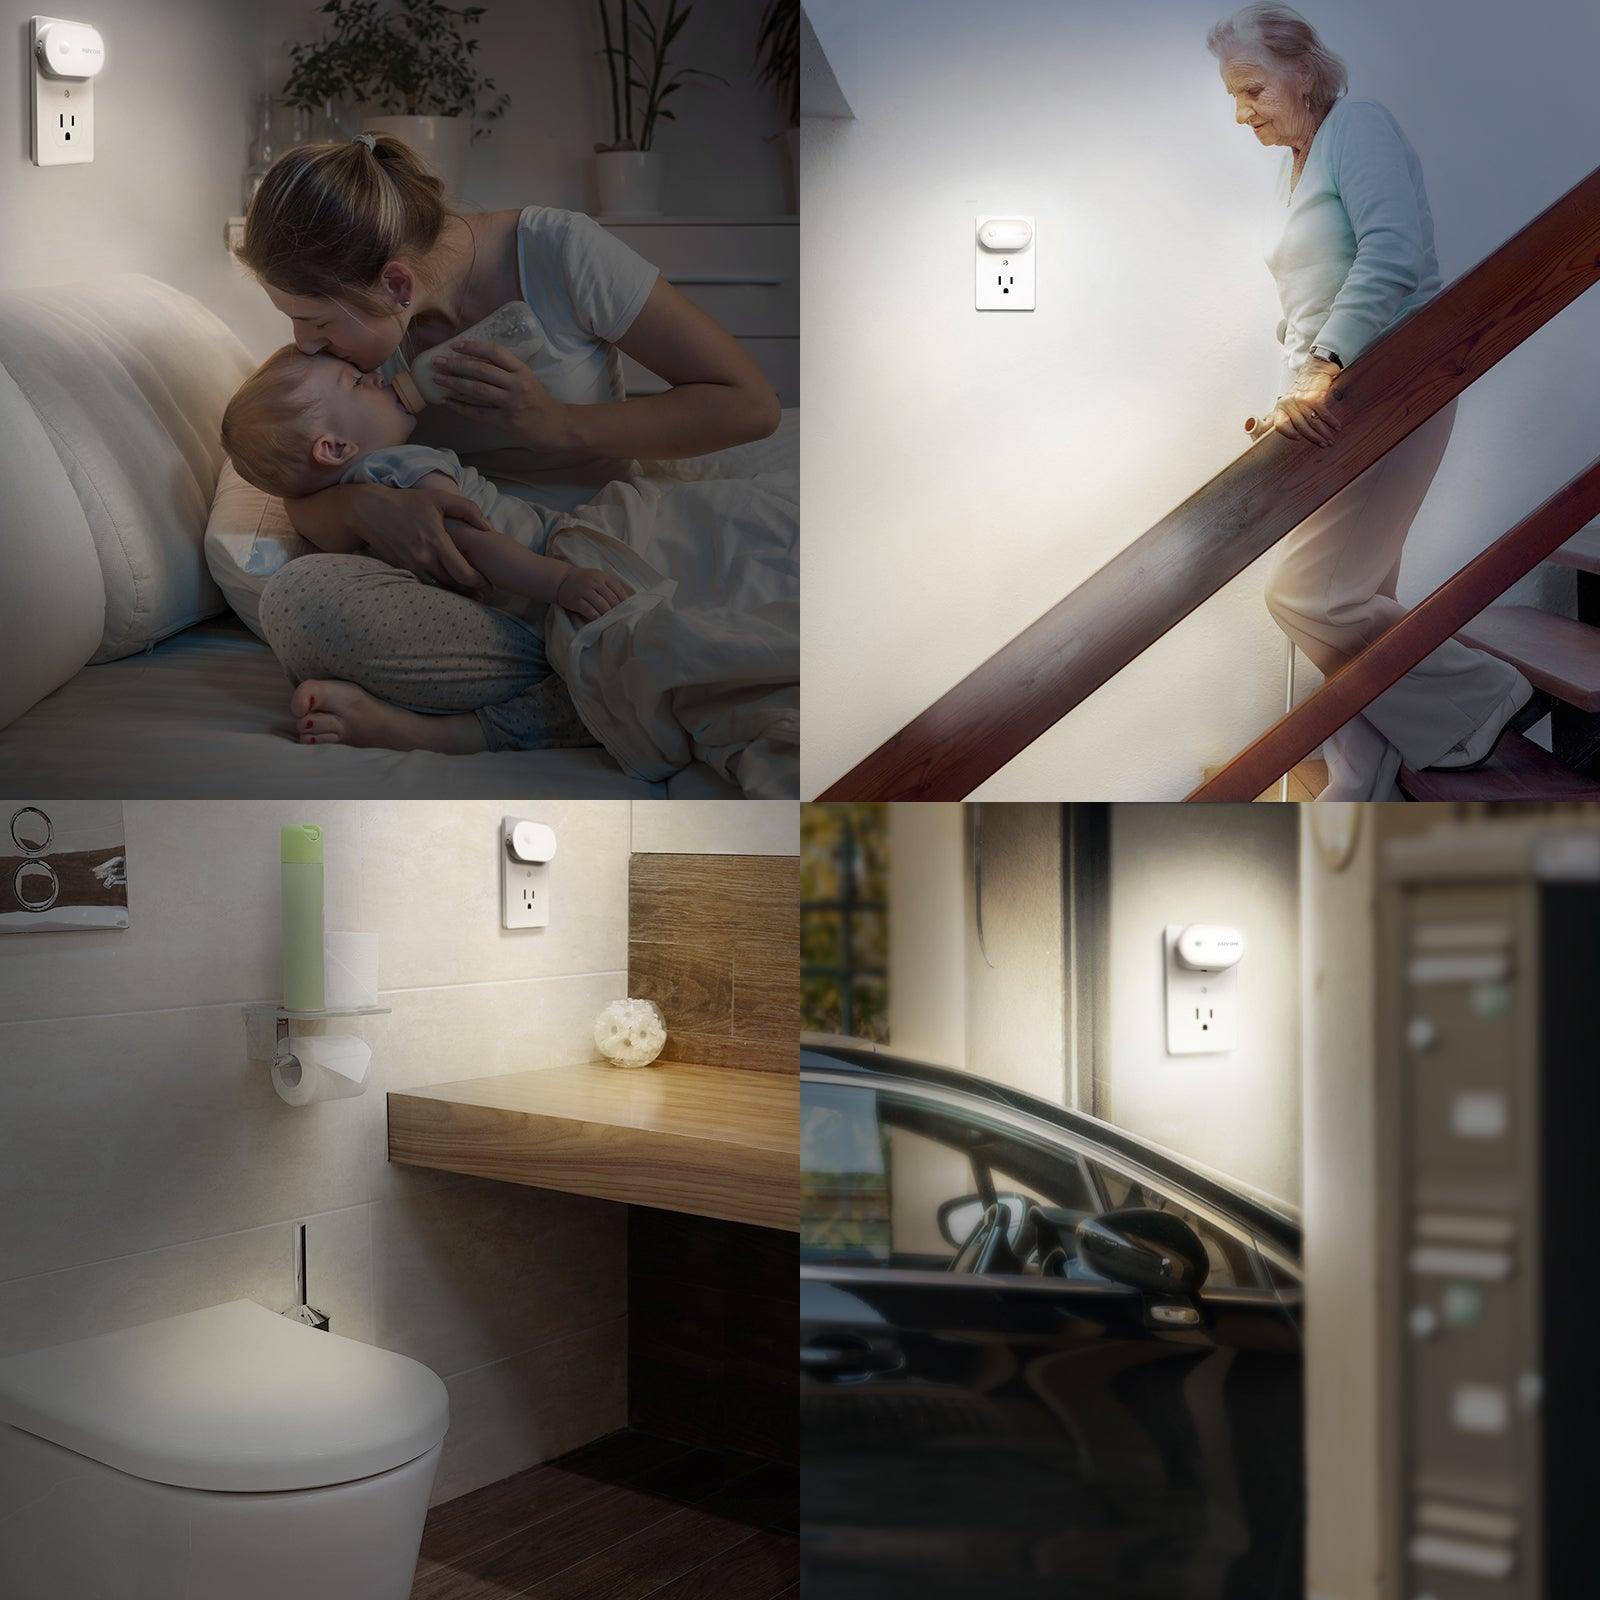 Toilet Night Light LED Motion Activated Sensor Lamp Bathroom Seat